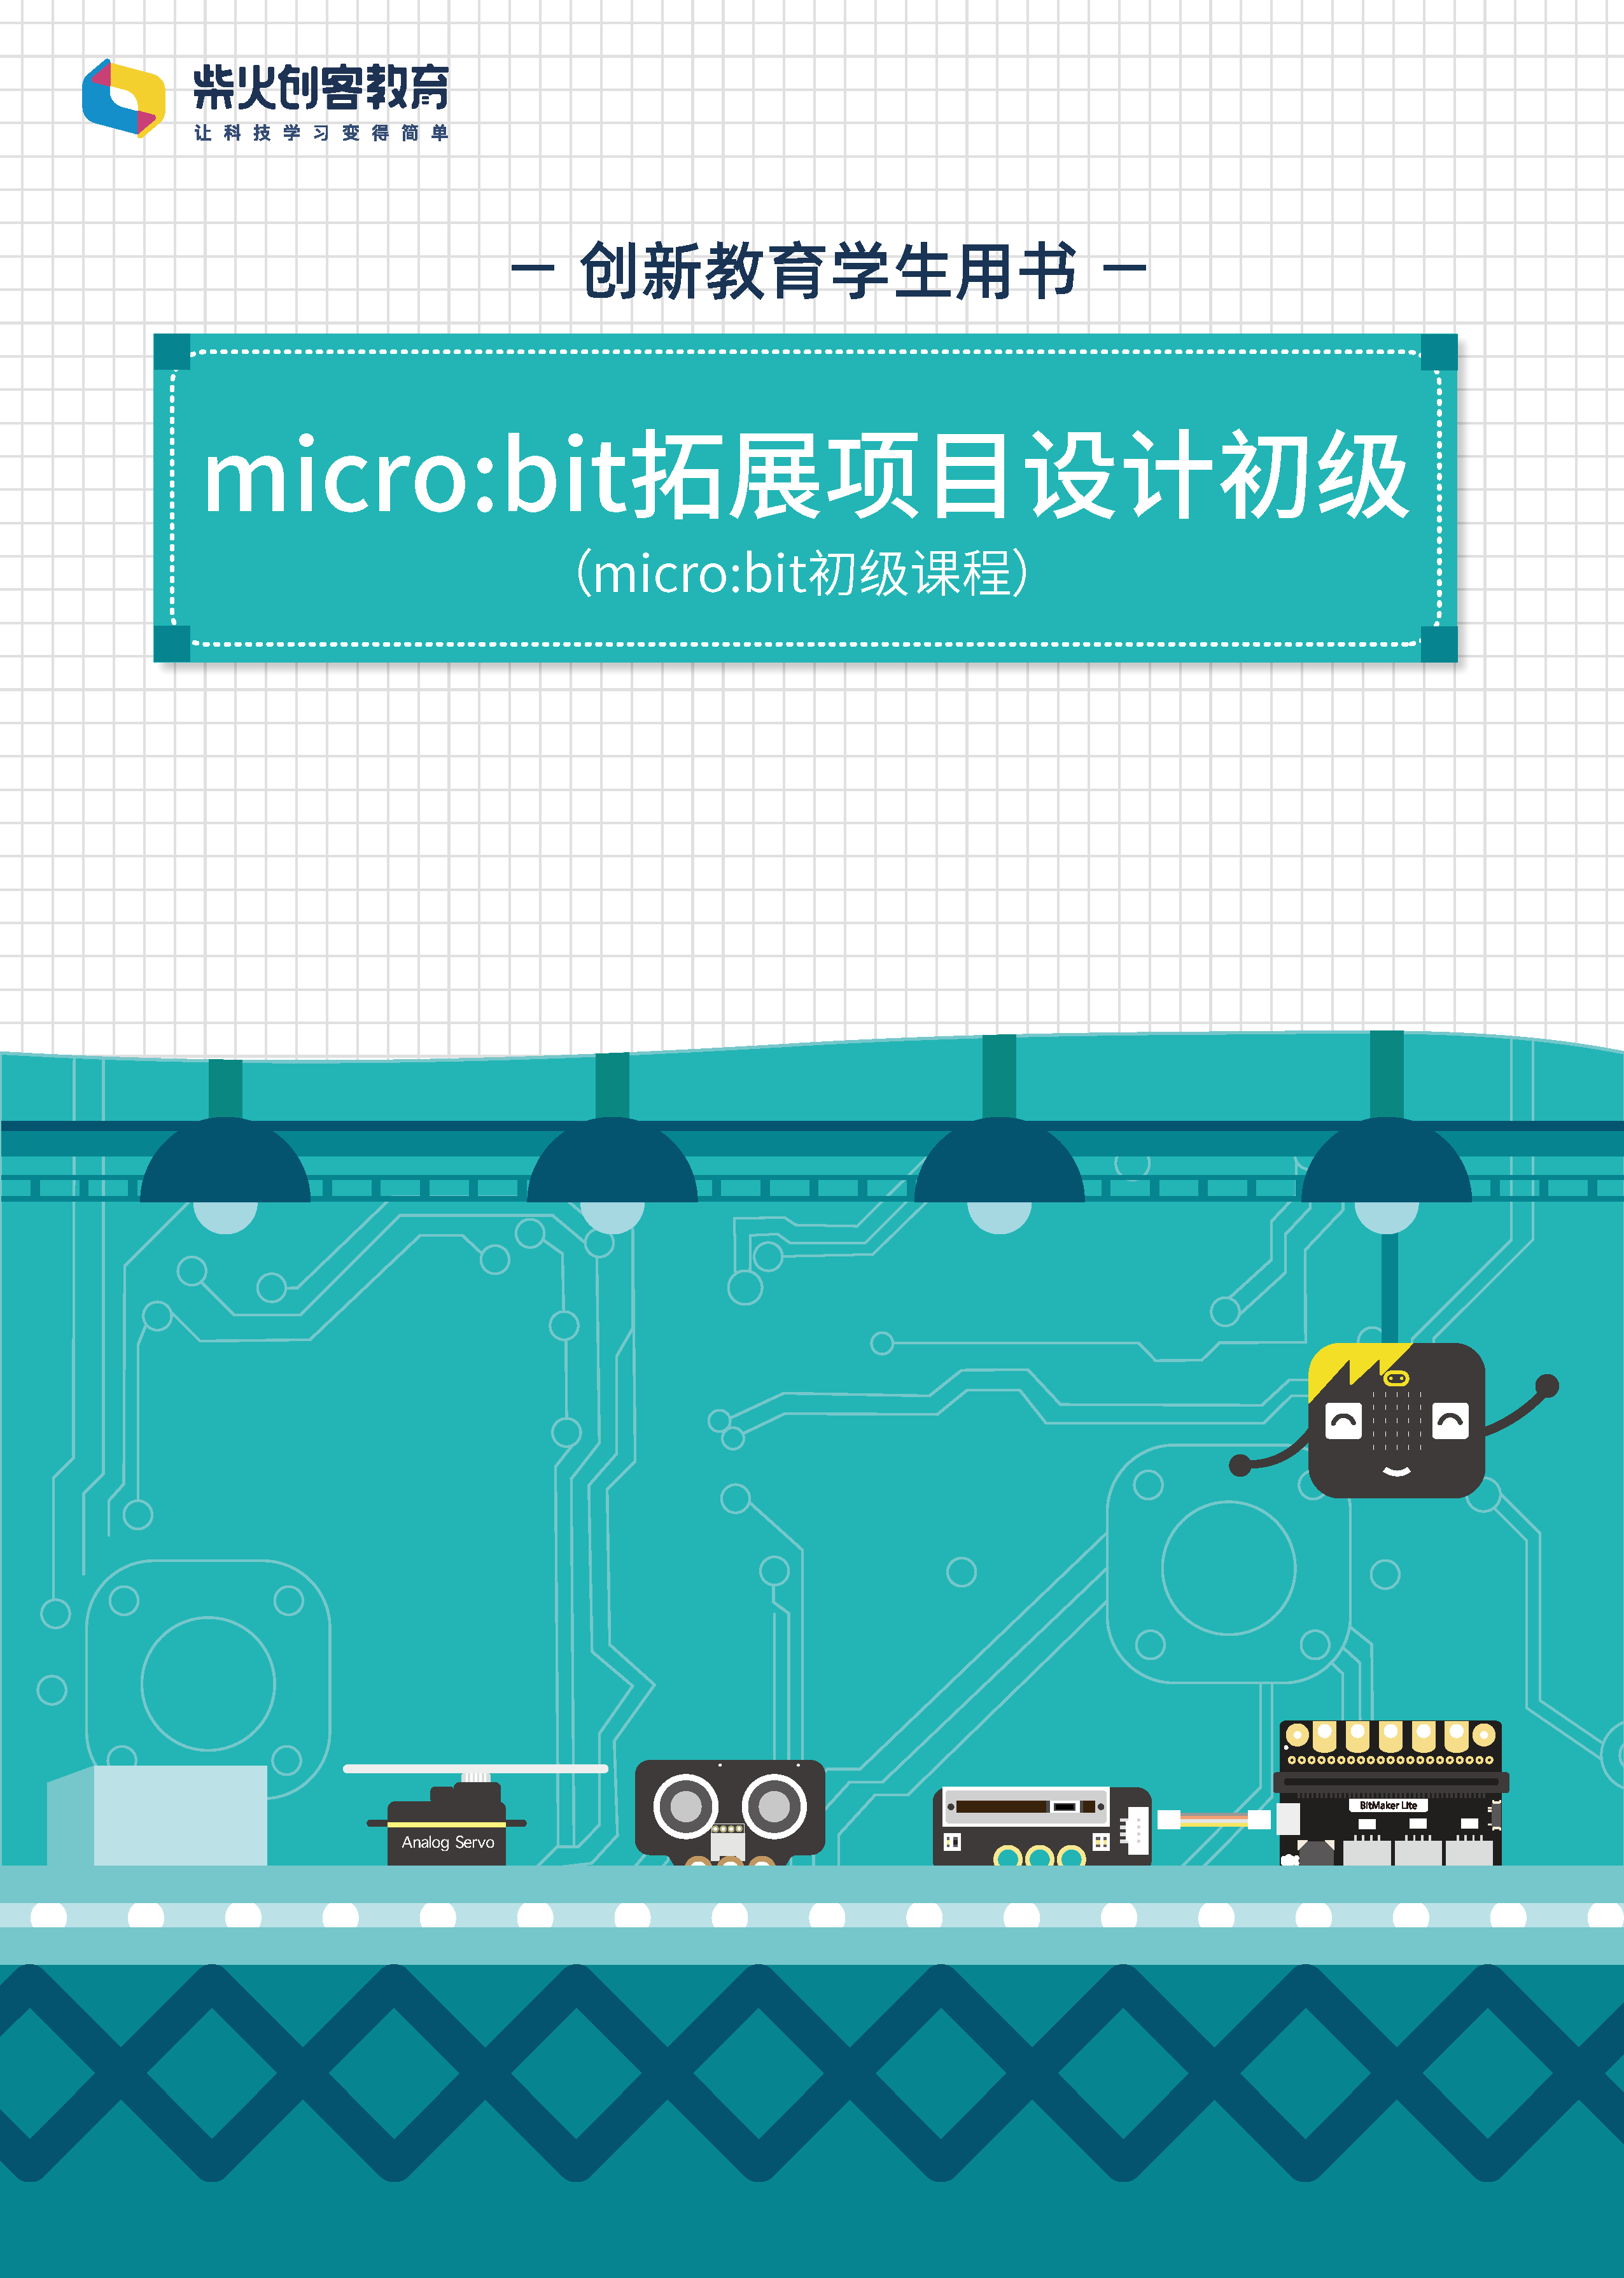 microbit-初级课程书籍封面_页面_1